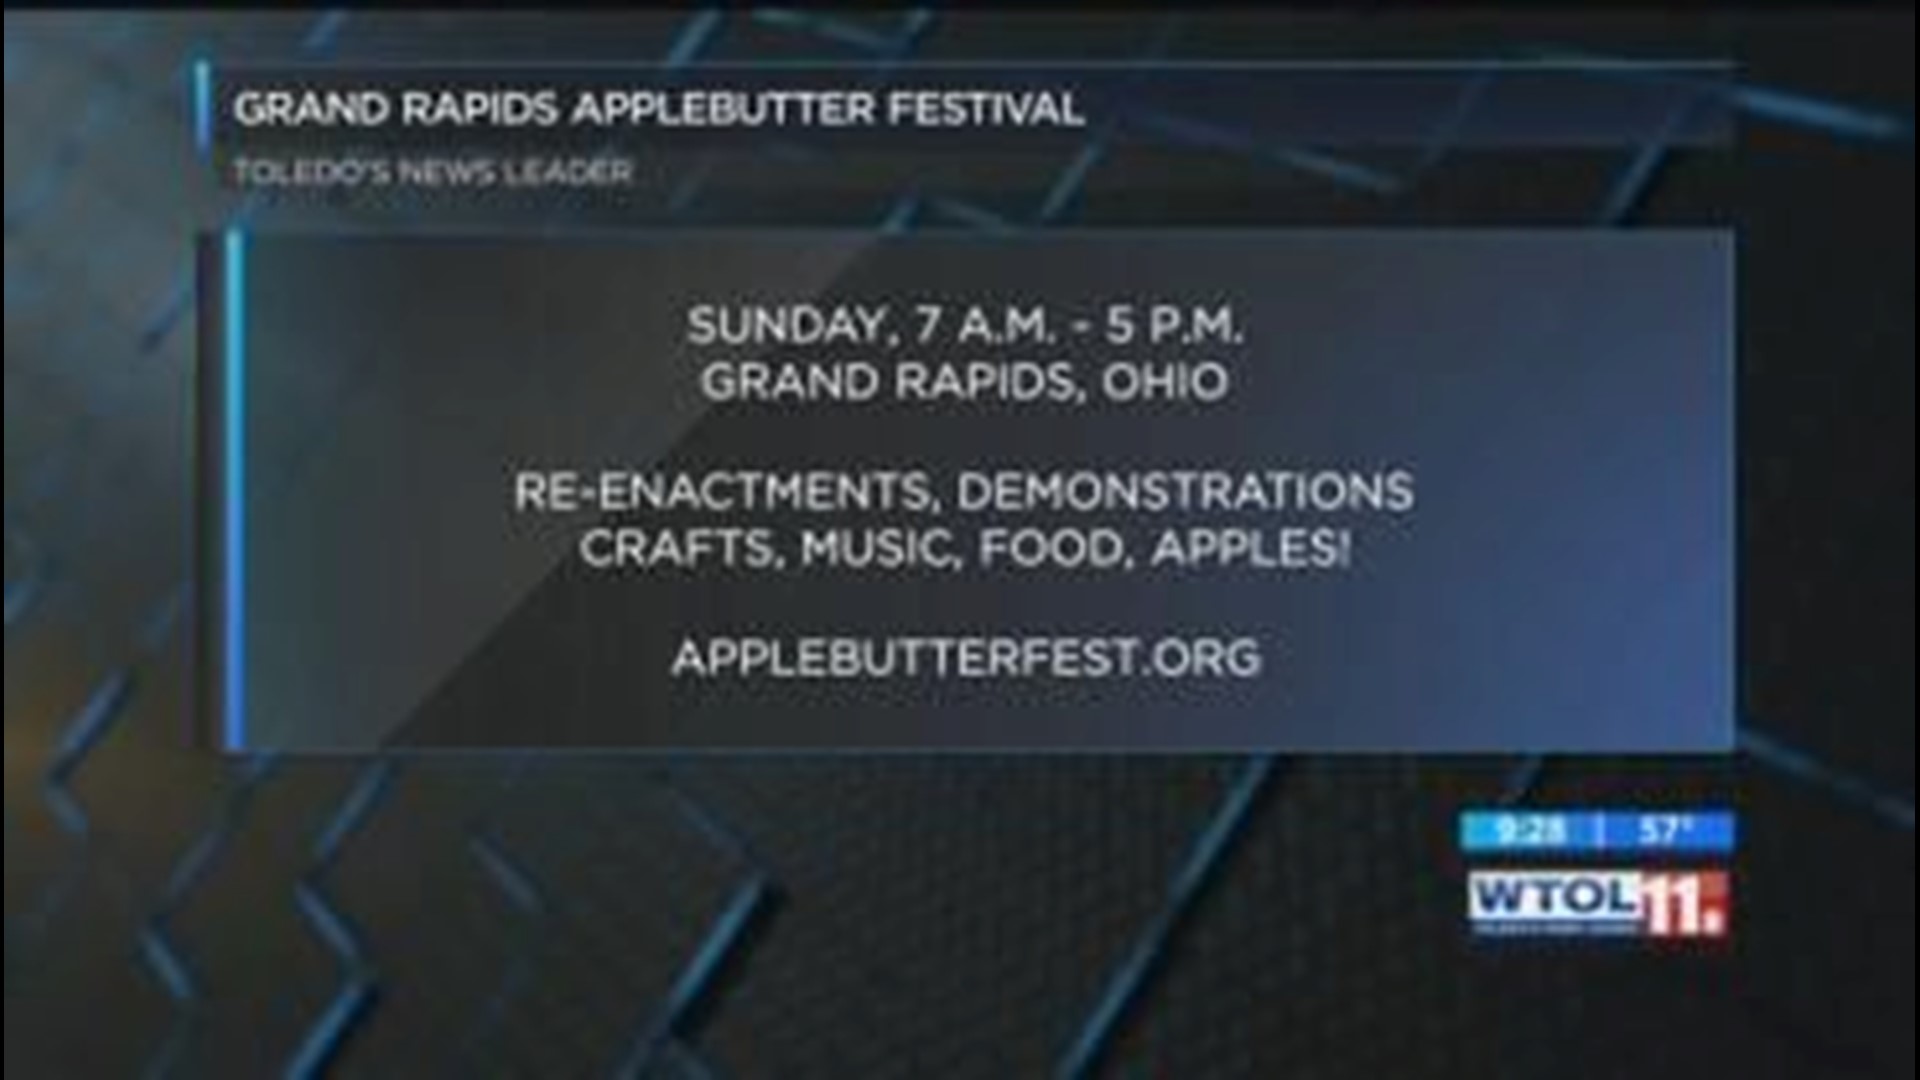 Enjoy the Grand Rapids Applebutter Festival this weekend